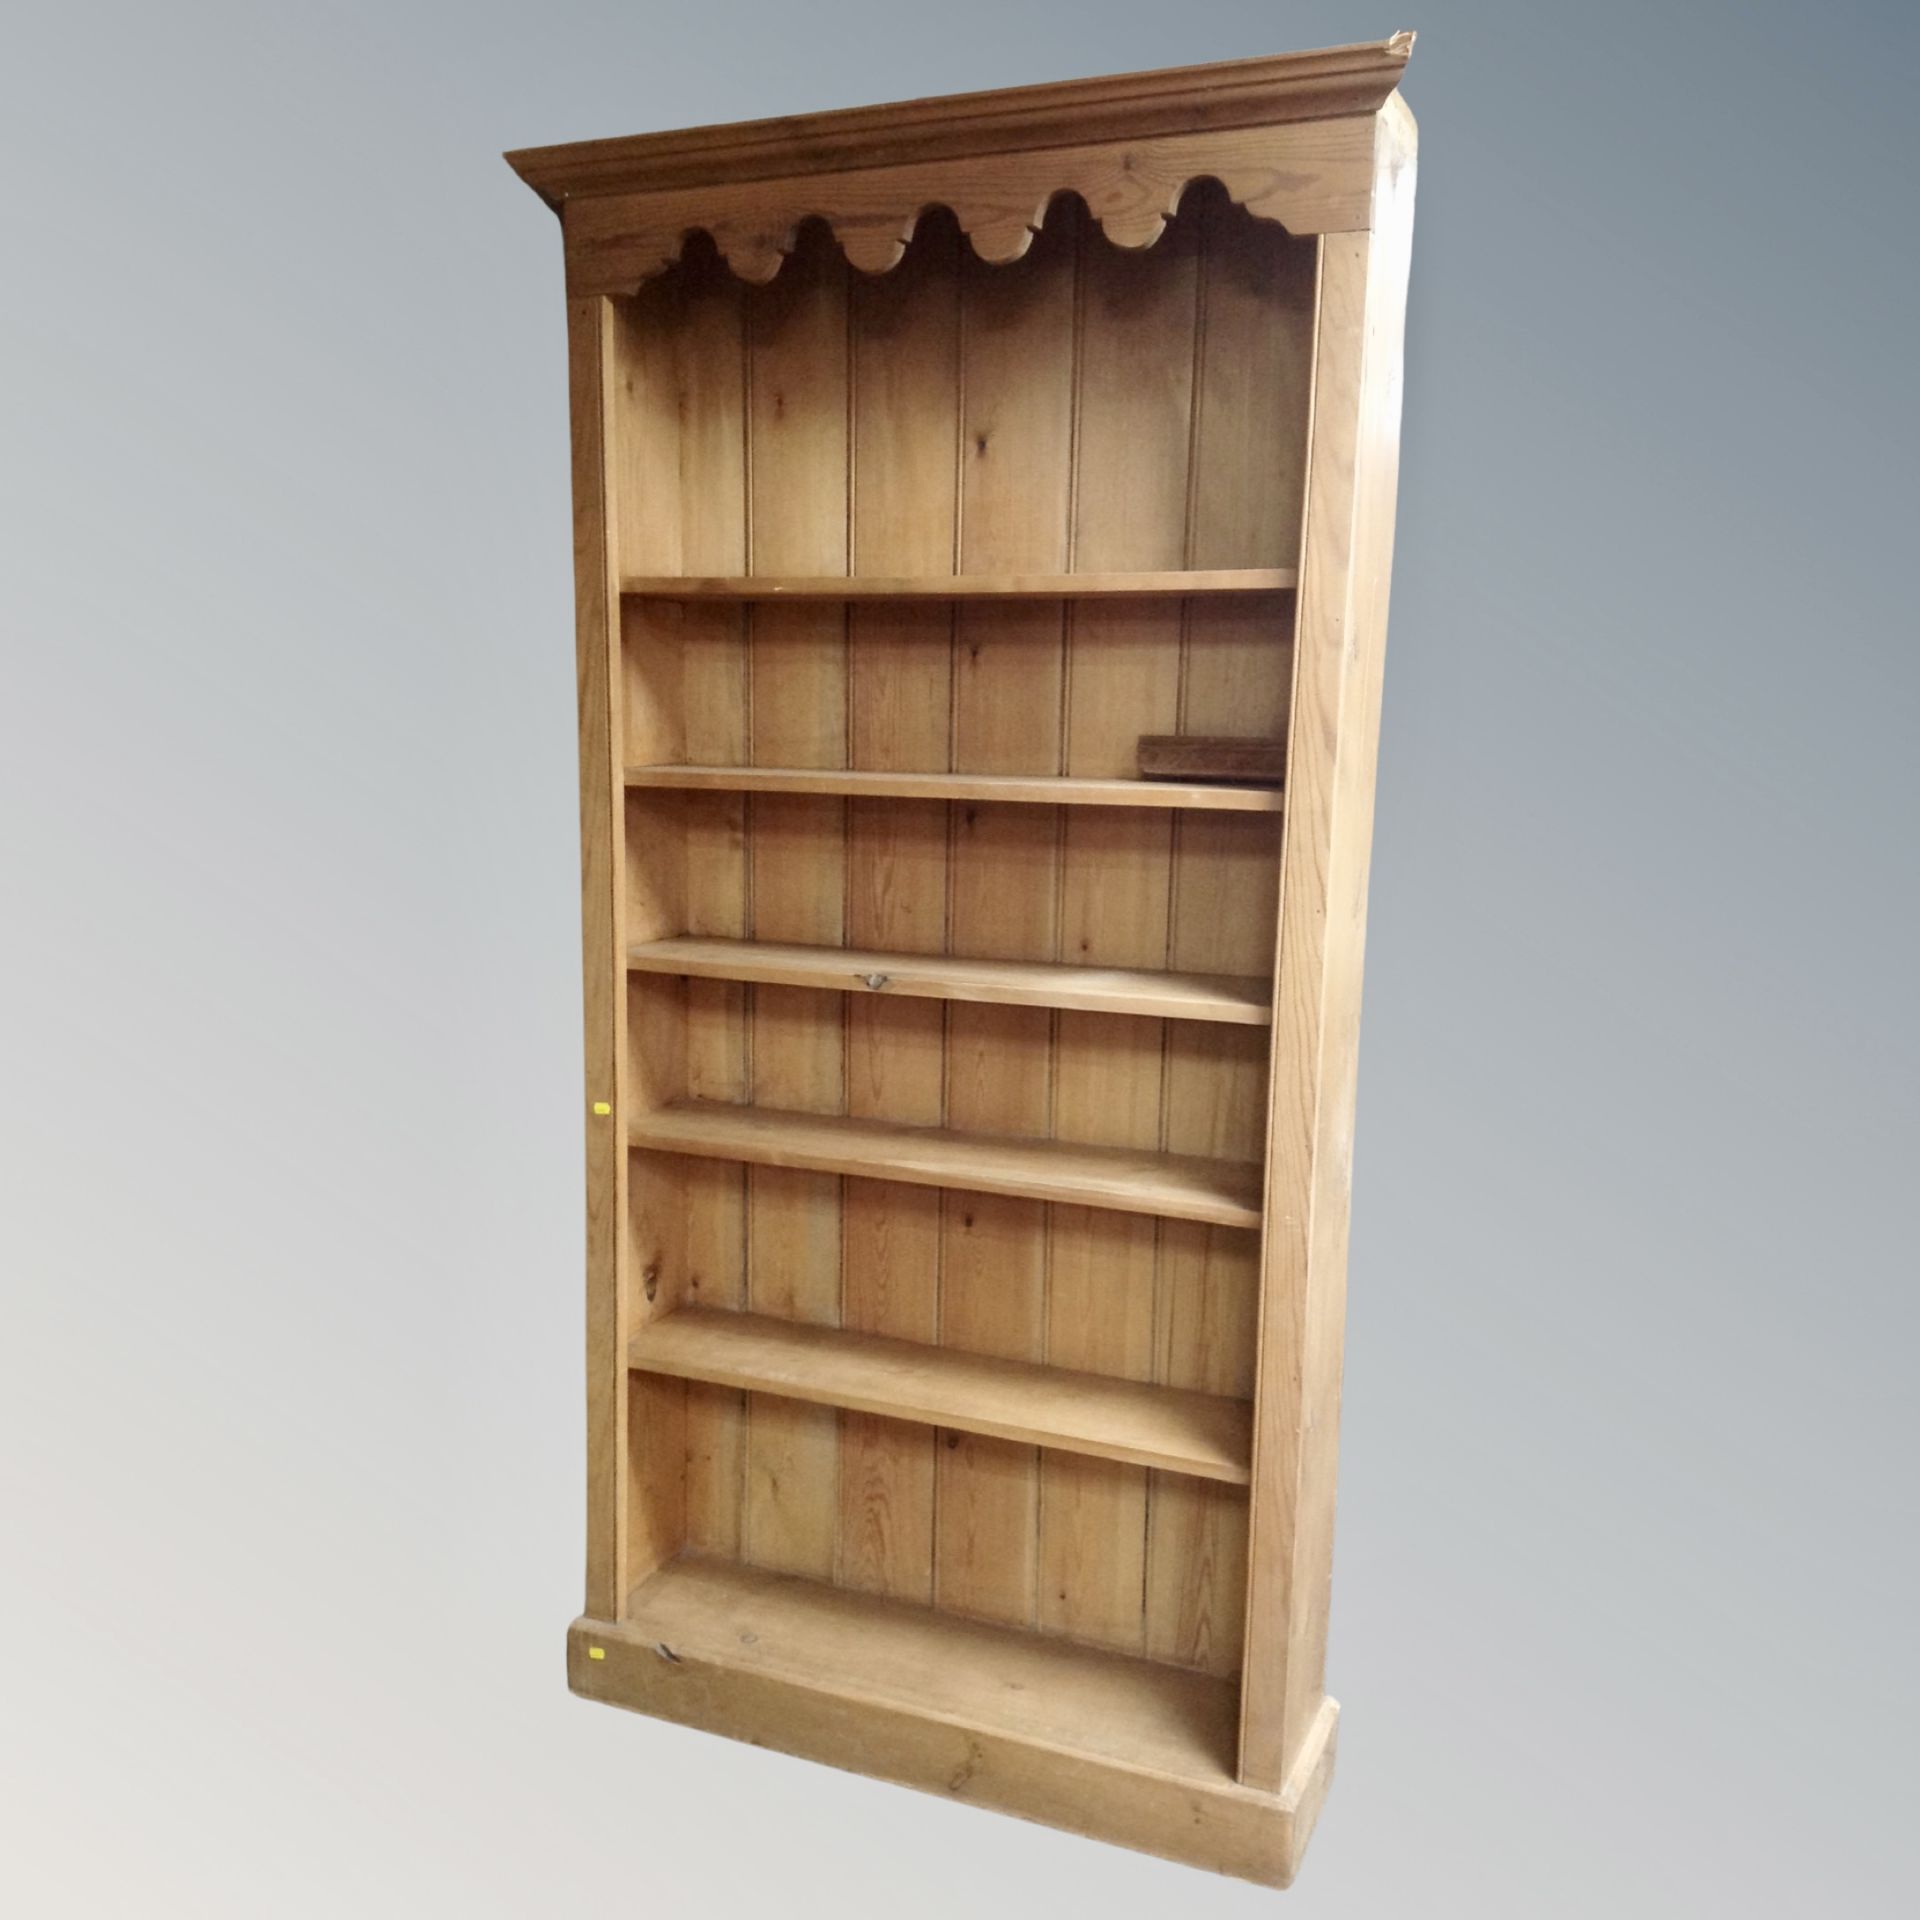 A set of vintage pine bookshelves (cornice a/f)